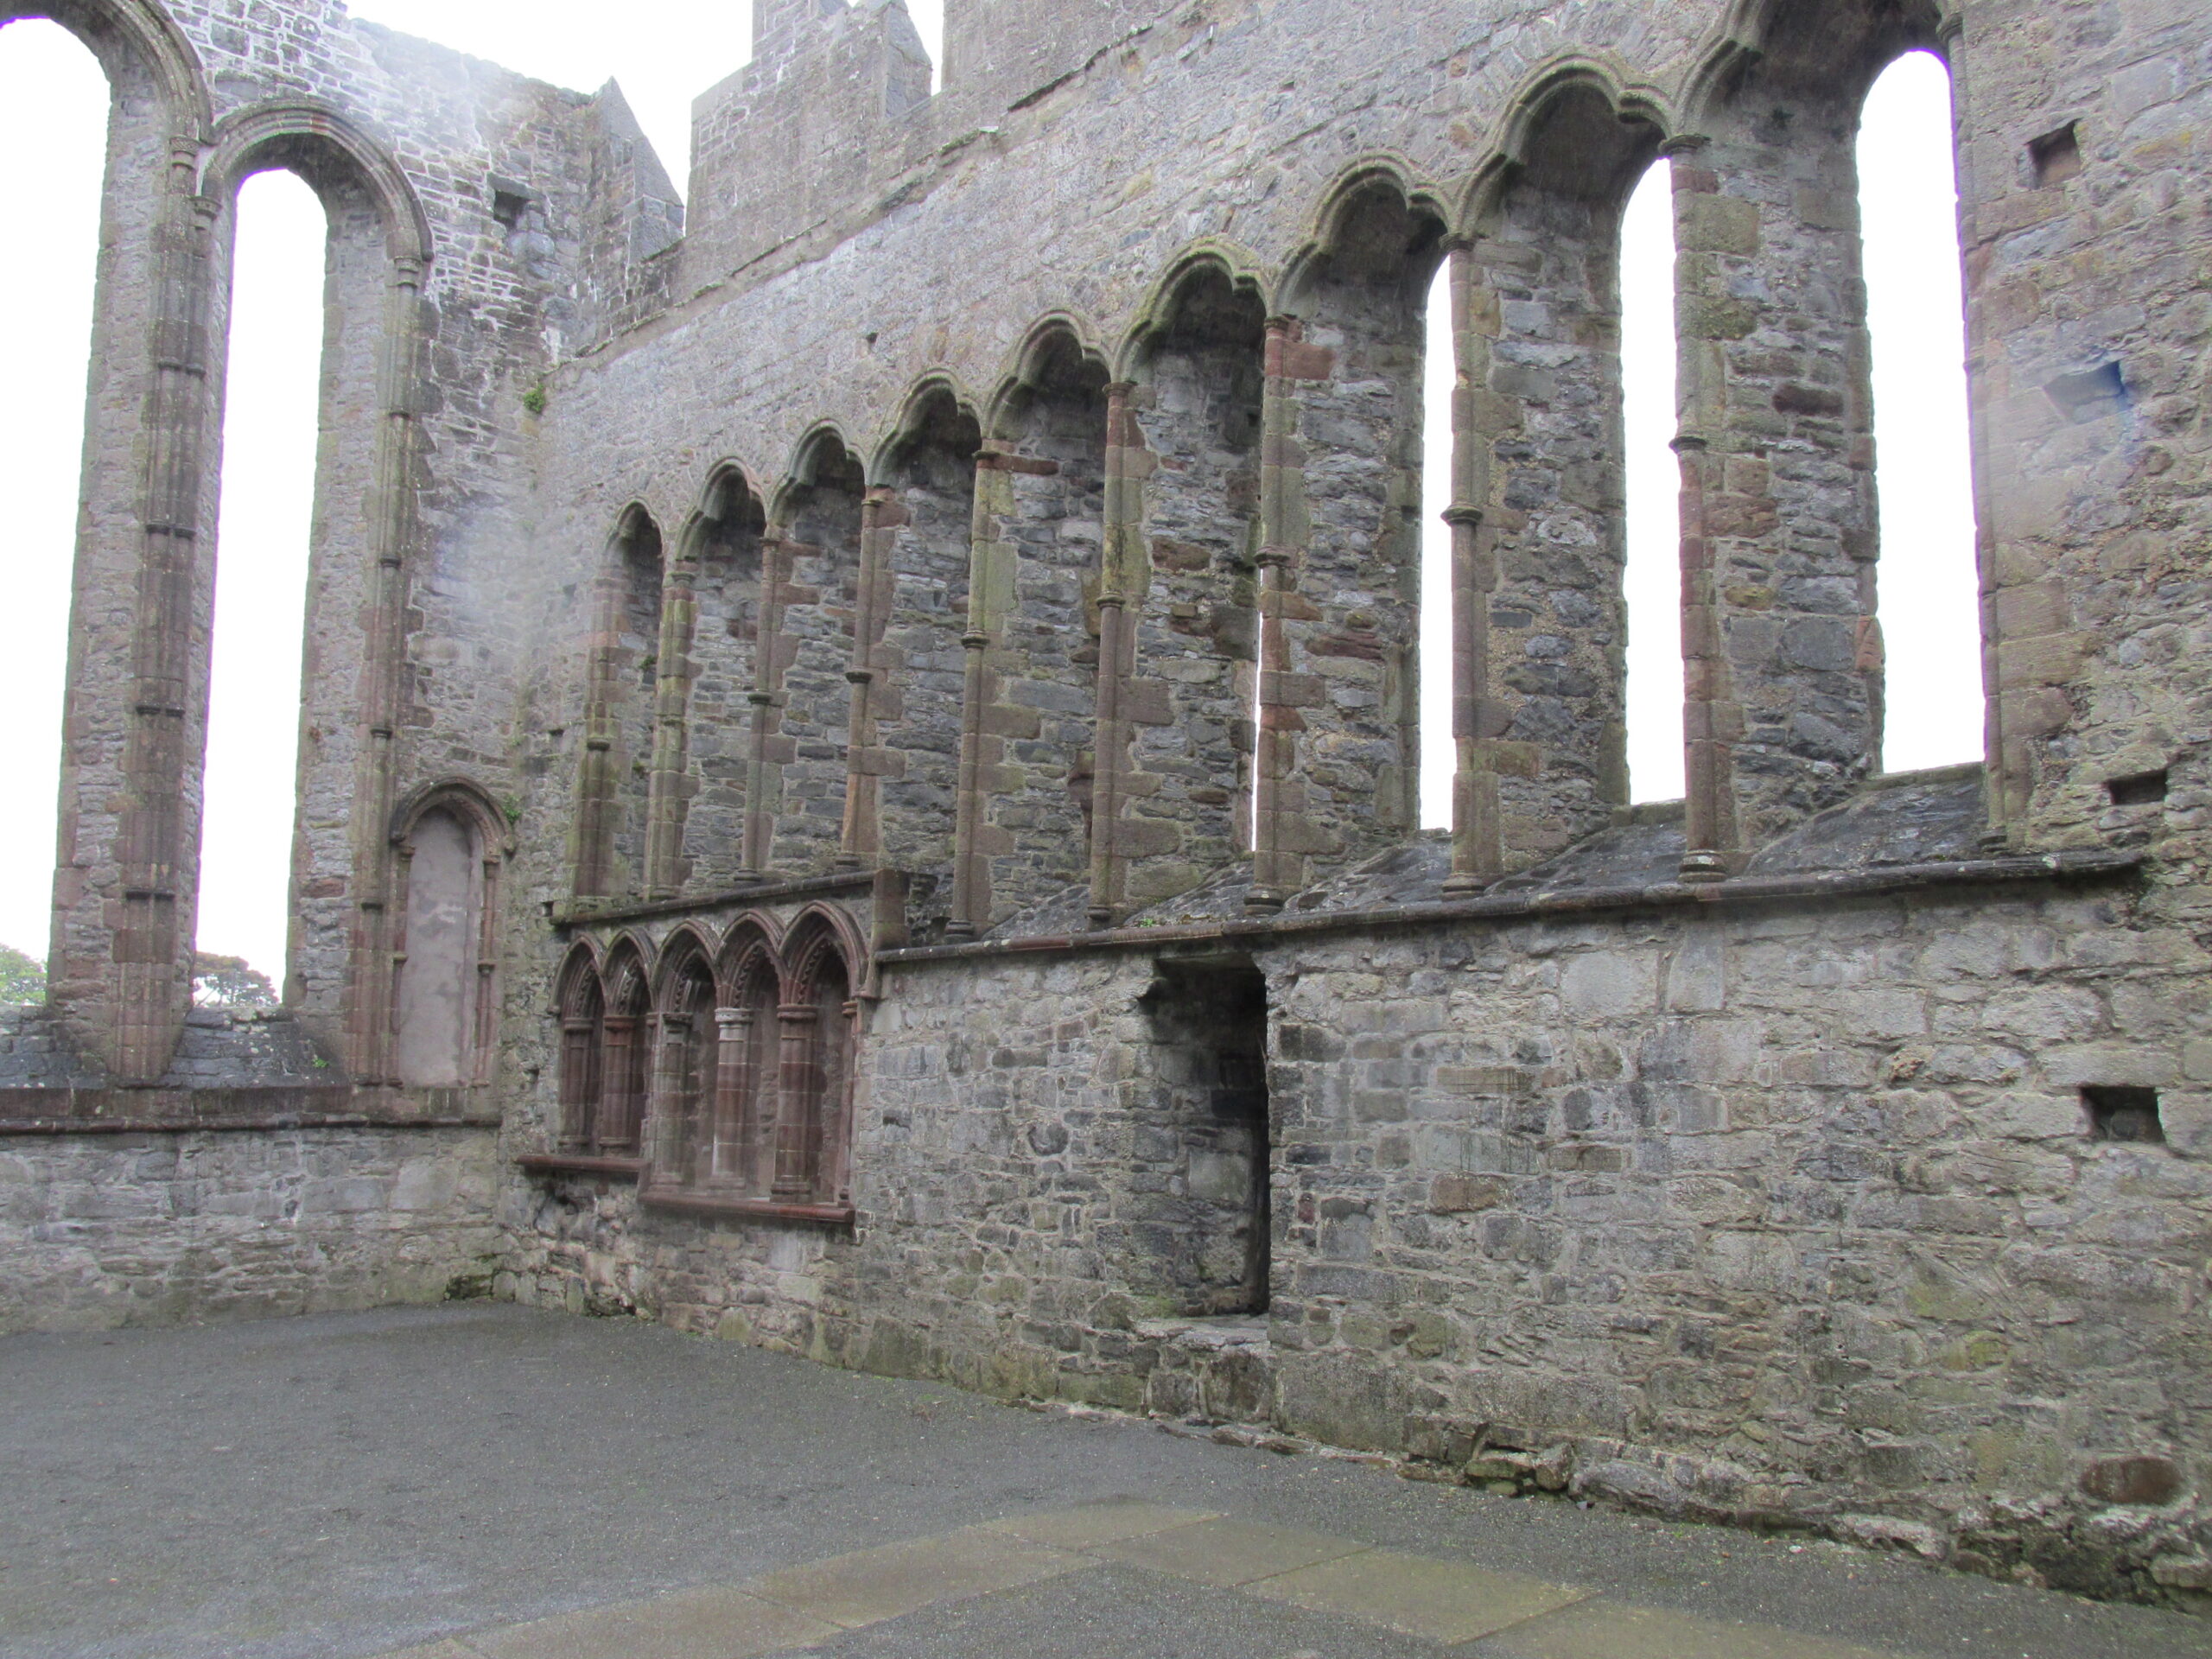 Widely splayed windows in Ardfert Cathedral